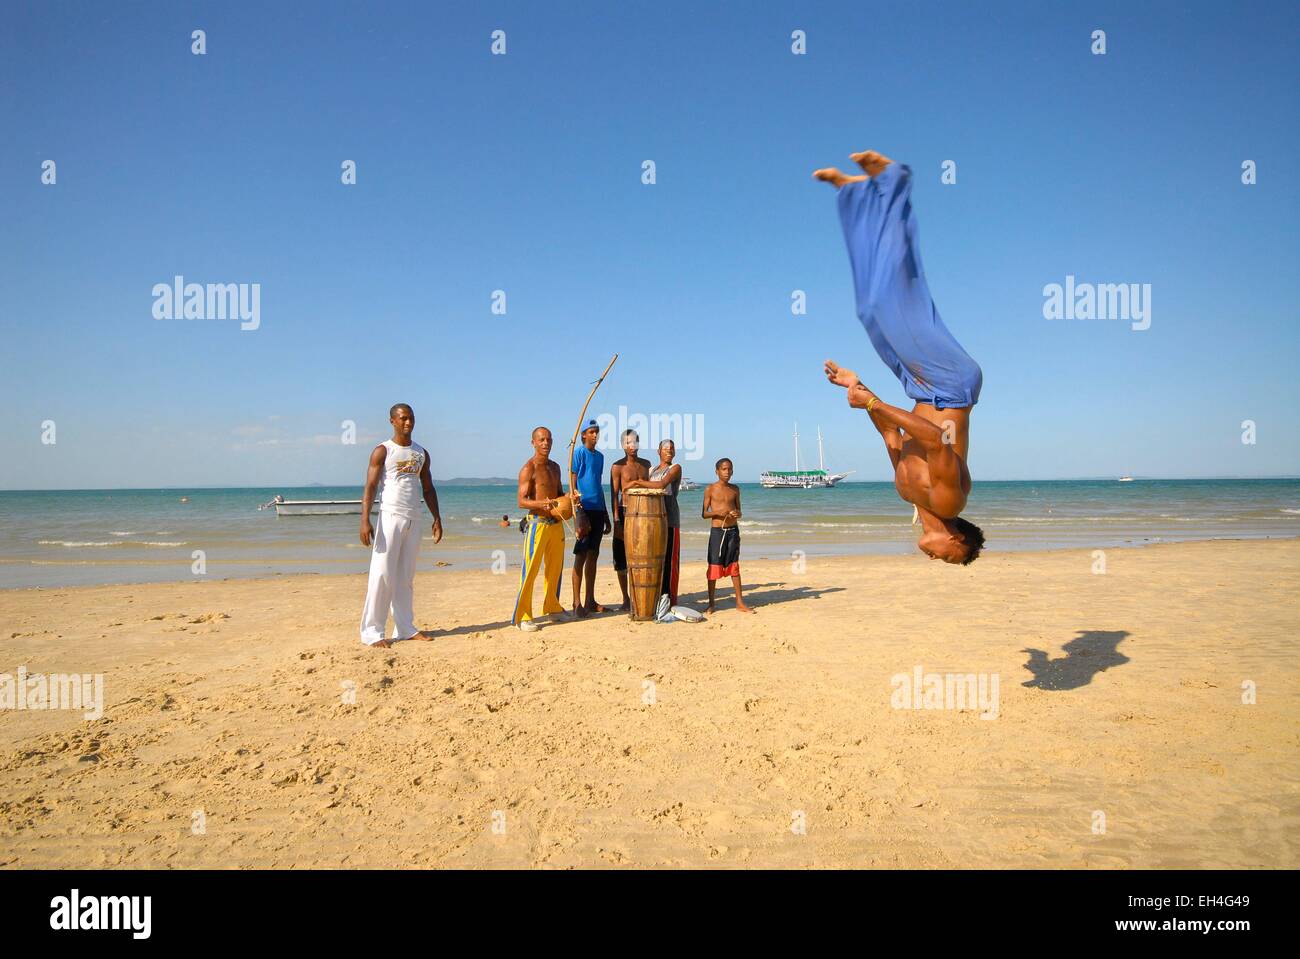 Brazil, Bahia state, Itaparica, Salvador de Bahia Bay, Itaparica island, capoeira on the beach of Itaparica Stock Photo